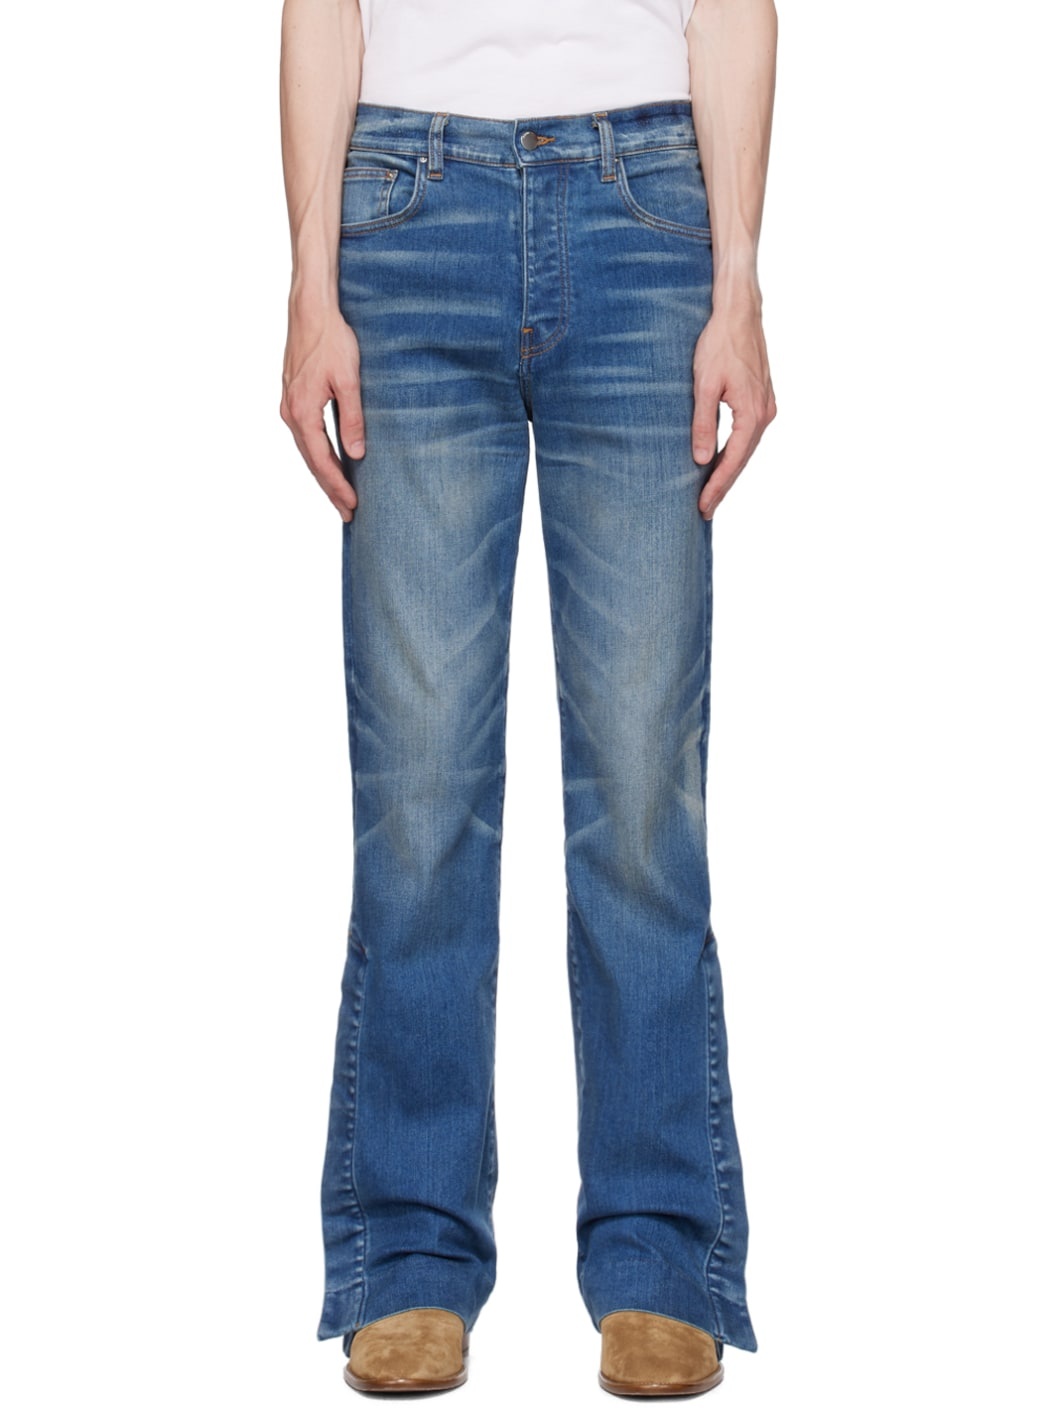 Indigo Stacked Jeans - 1